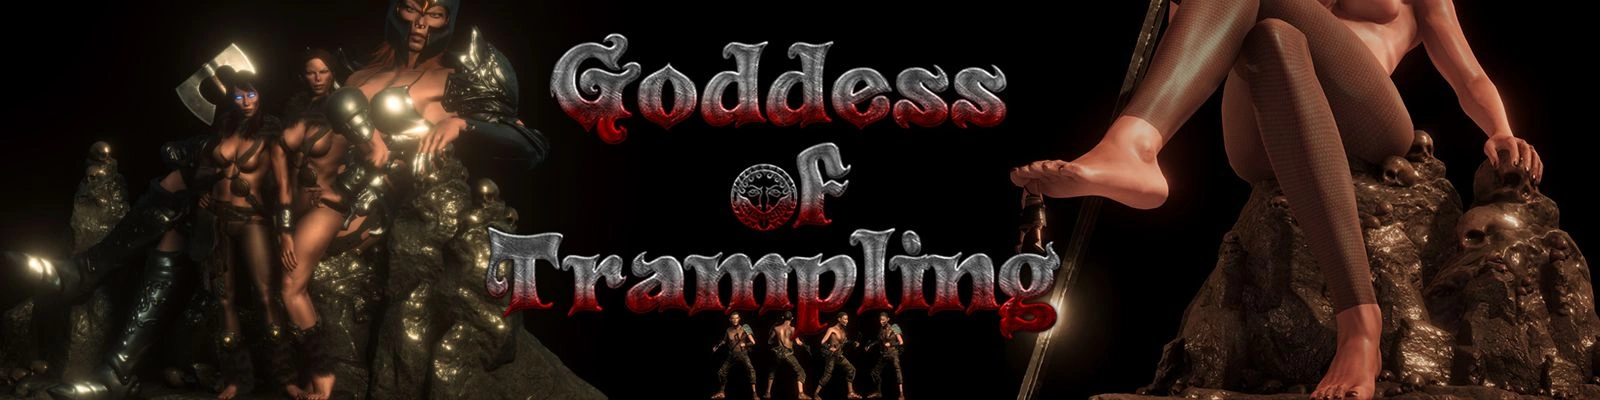 Goddess of Trampling [v1.0] main image